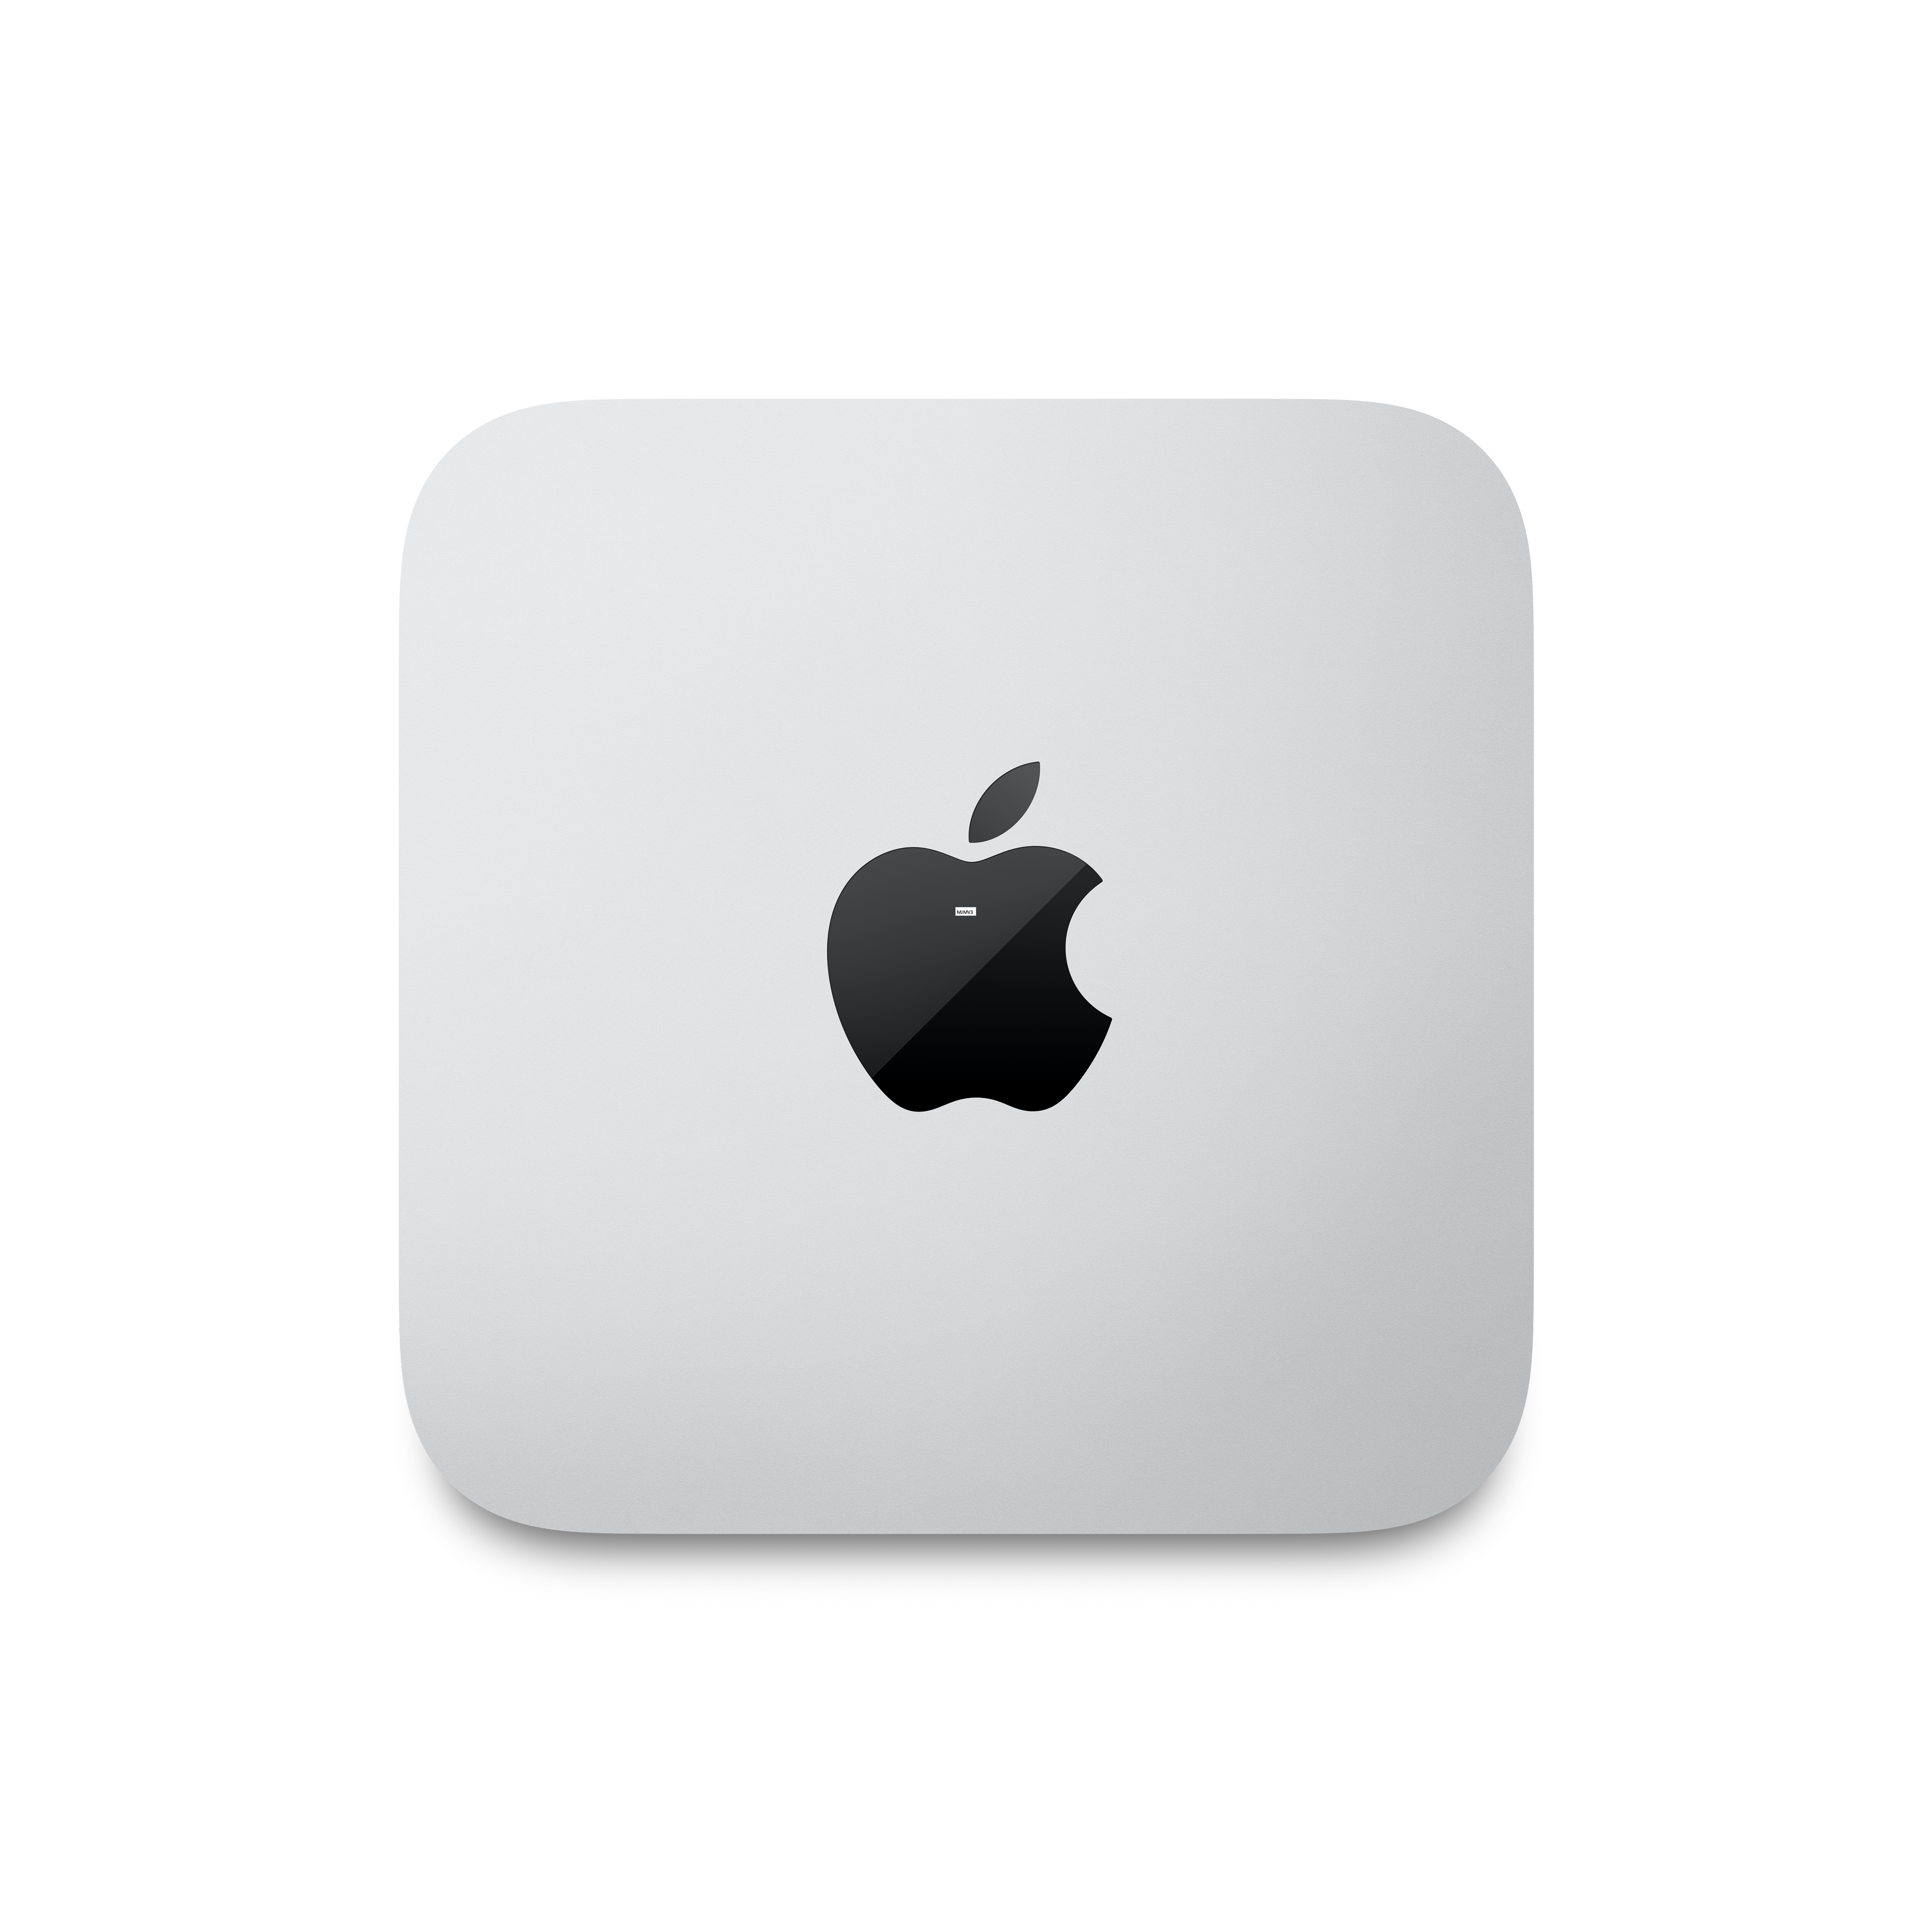 Mac Studio: Apple M1 Max chip with 10‑core CPU and 24‑core GPU, 512 GB